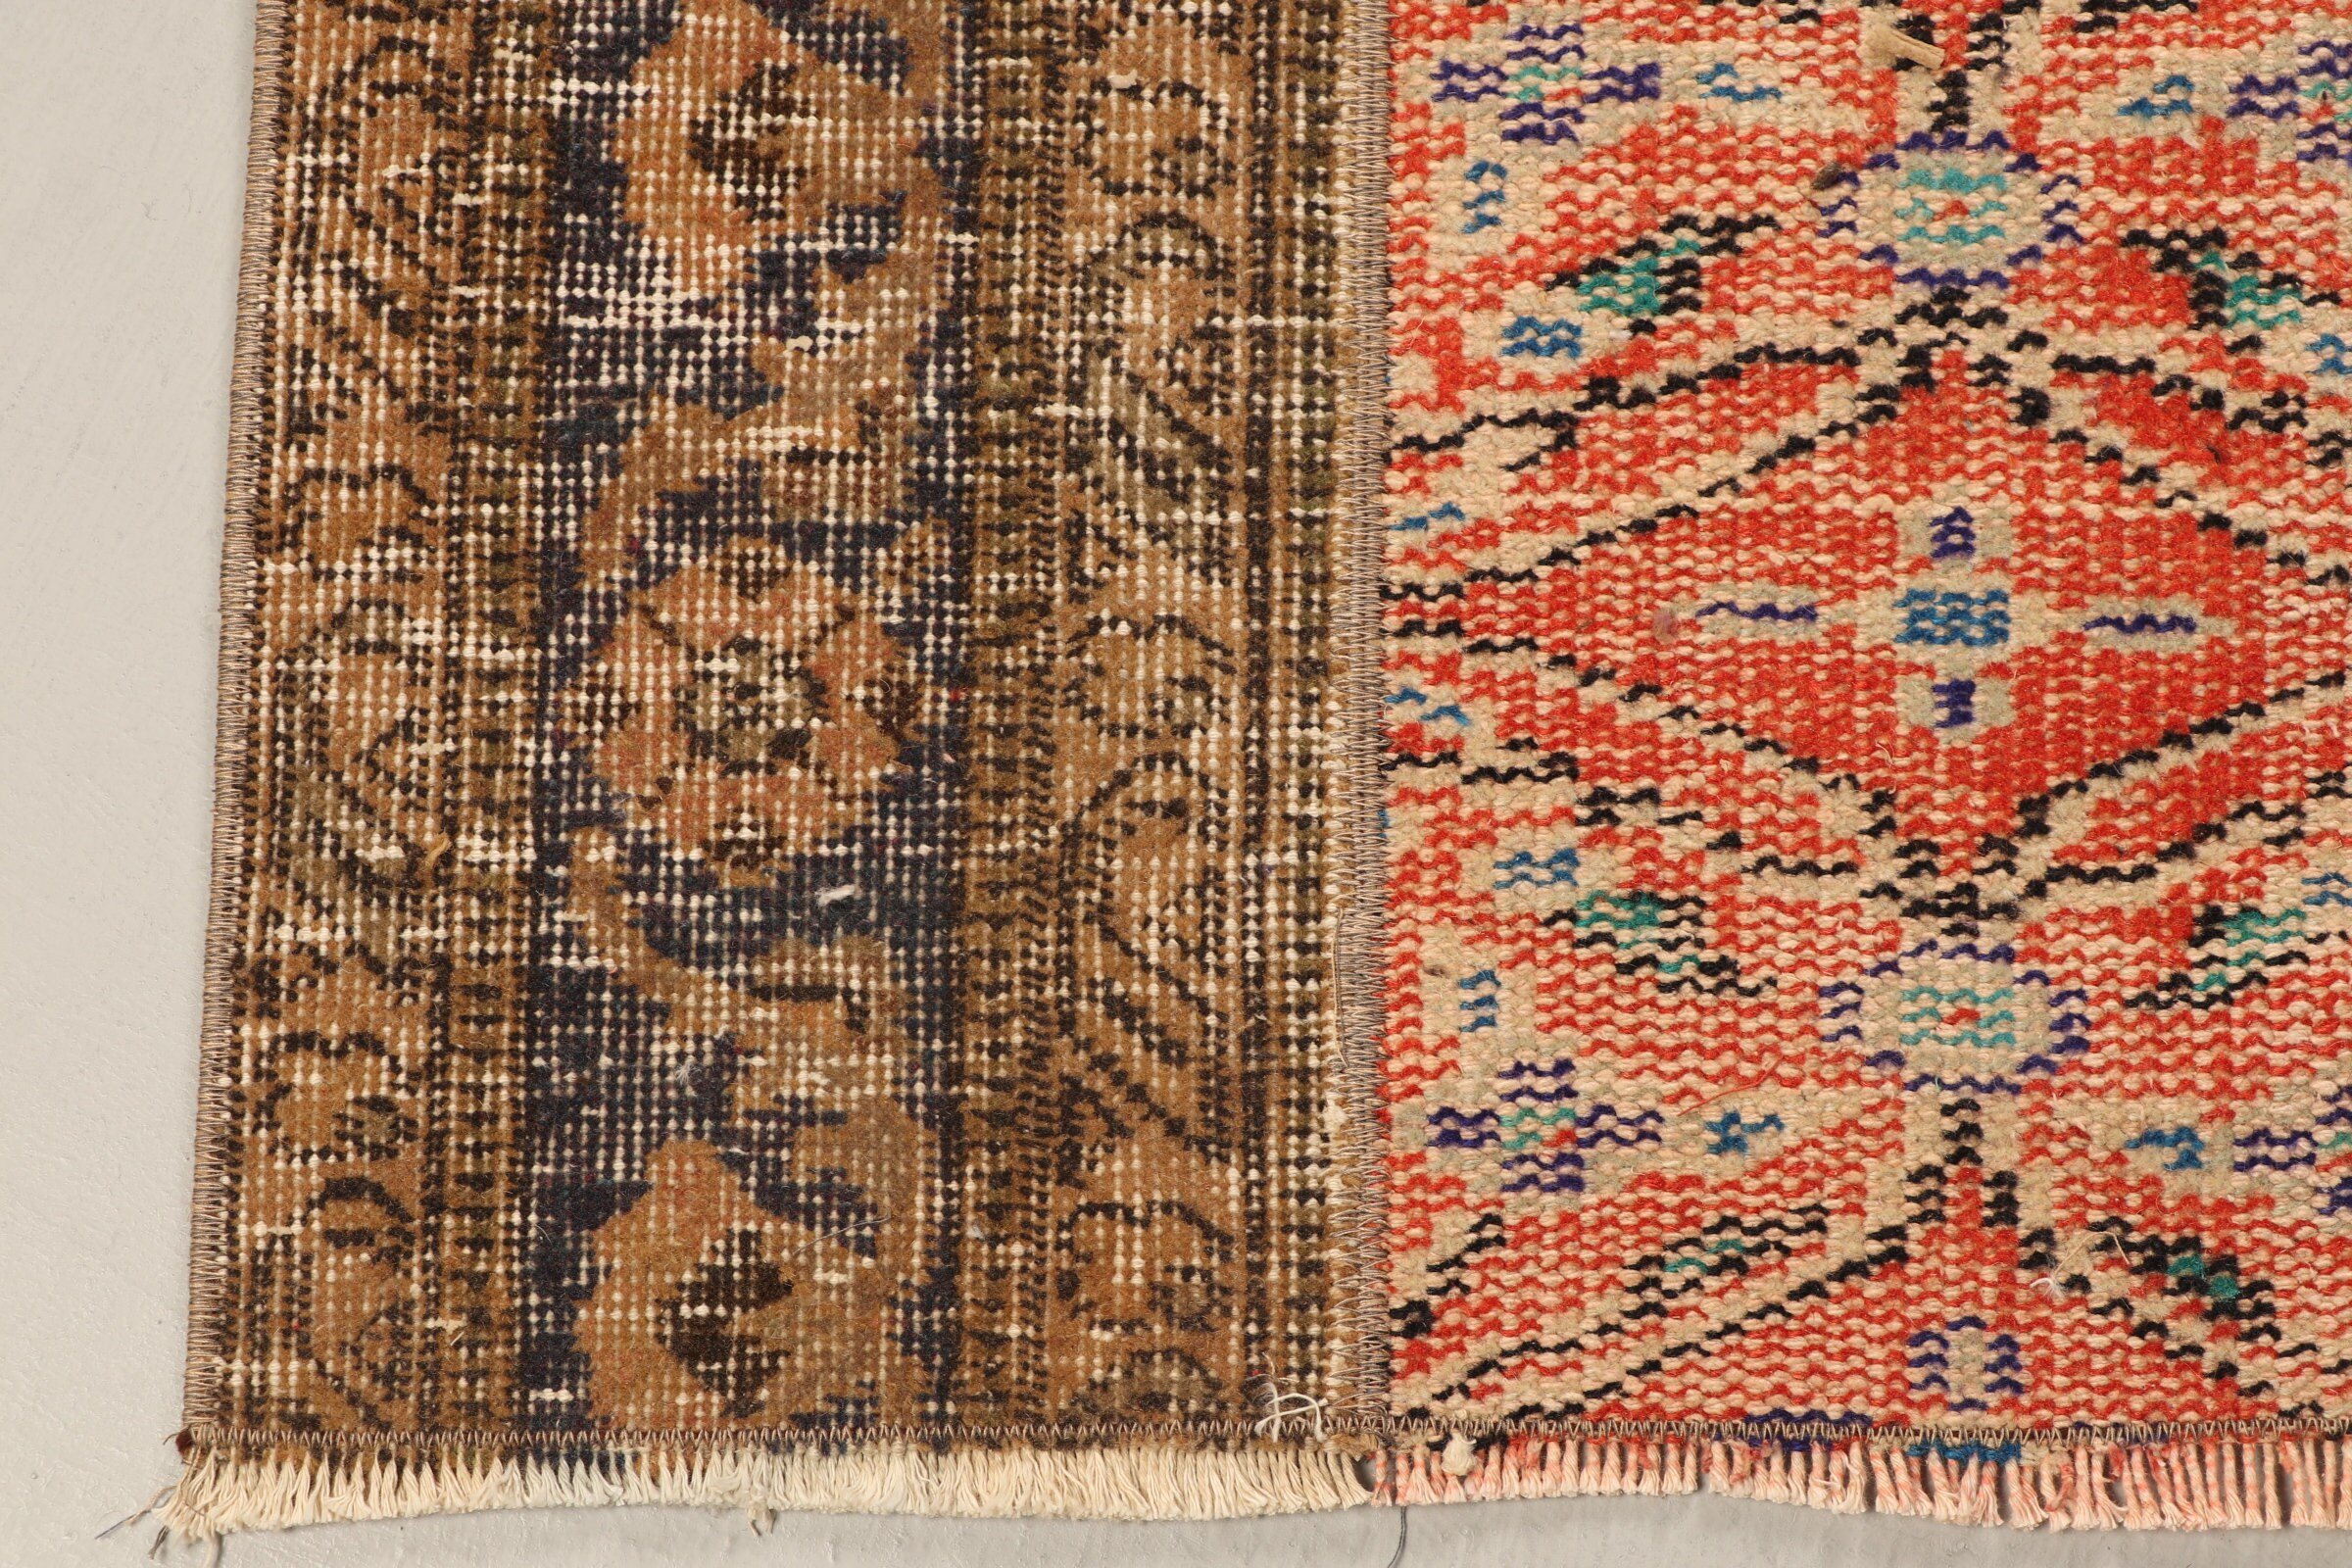 Turkish Rug, Vintage Rugs, Old Rug, Car Mat Rugs, Oriental Rugs, Wall Hanging Rugs, Orange Antique Rug, 2.3x3.9 ft Small Rug